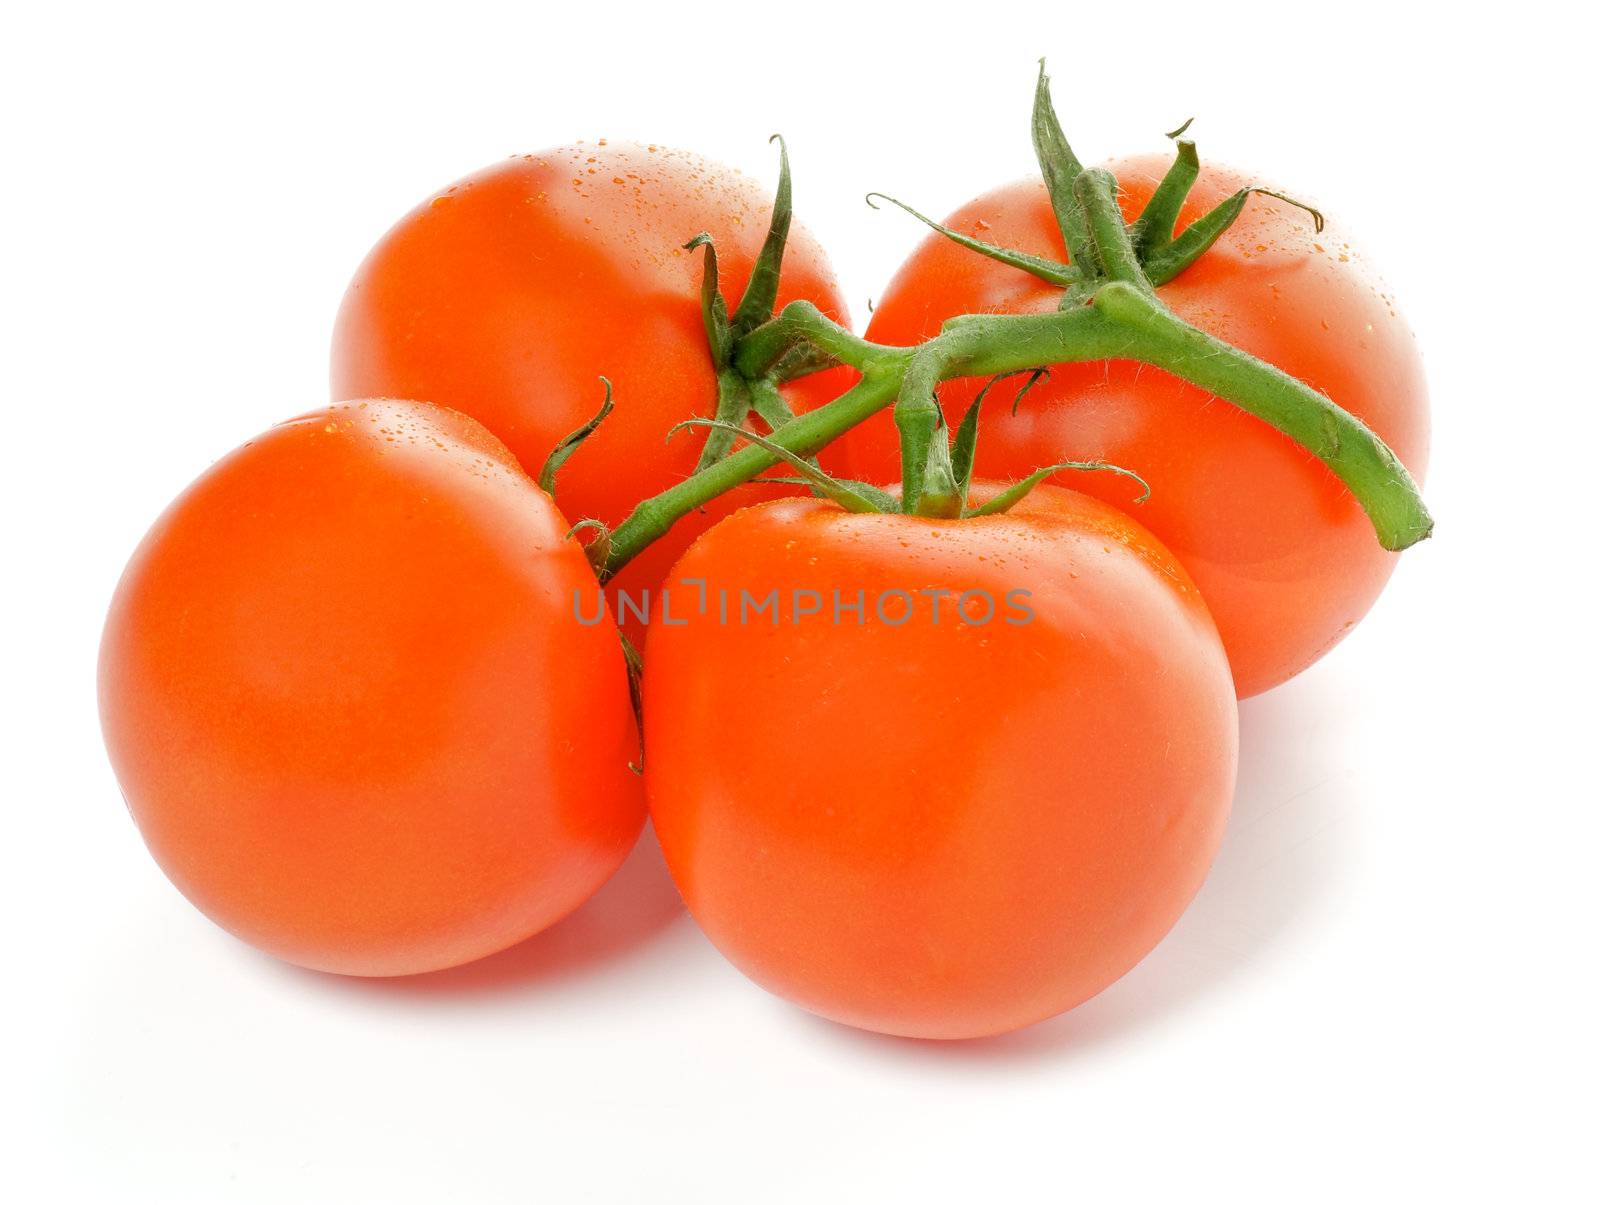 Four Fresh Tomatoes by zhekos